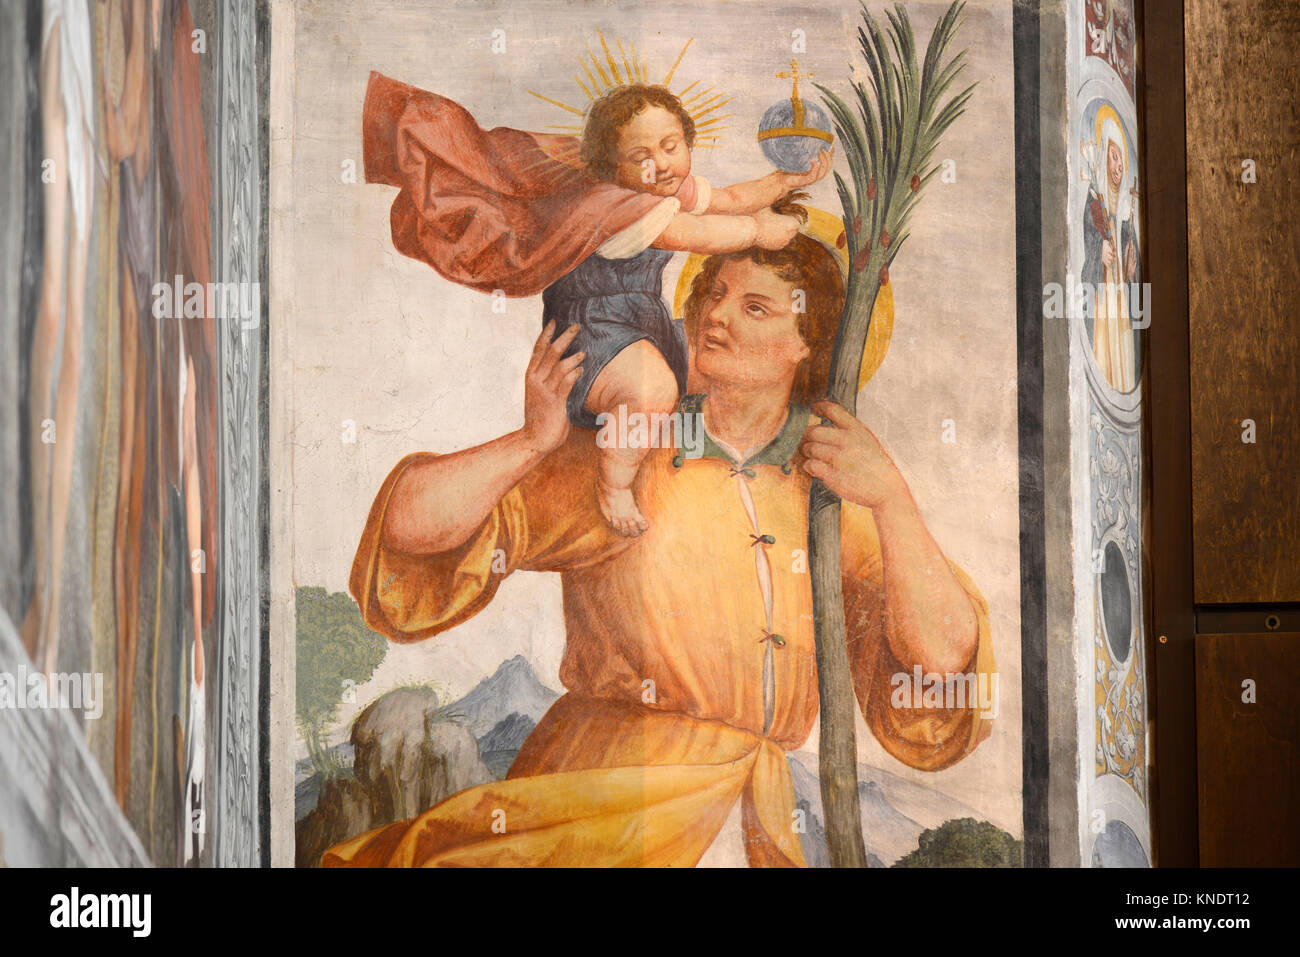 Italy S.Daniele del Friuli Church of S. Antonio Abate. Cycle of frescoes from the 15th century by Pellegrino da San Daniele. Right wall of the nave: S. Cristoforo Stock Photo